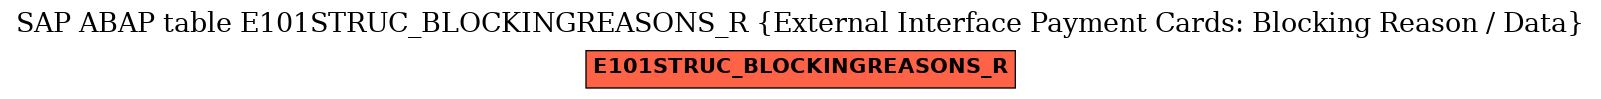 E-R Diagram for table E101STRUC_BLOCKINGREASONS_R (External Interface Payment Cards: Blocking Reason / Data)